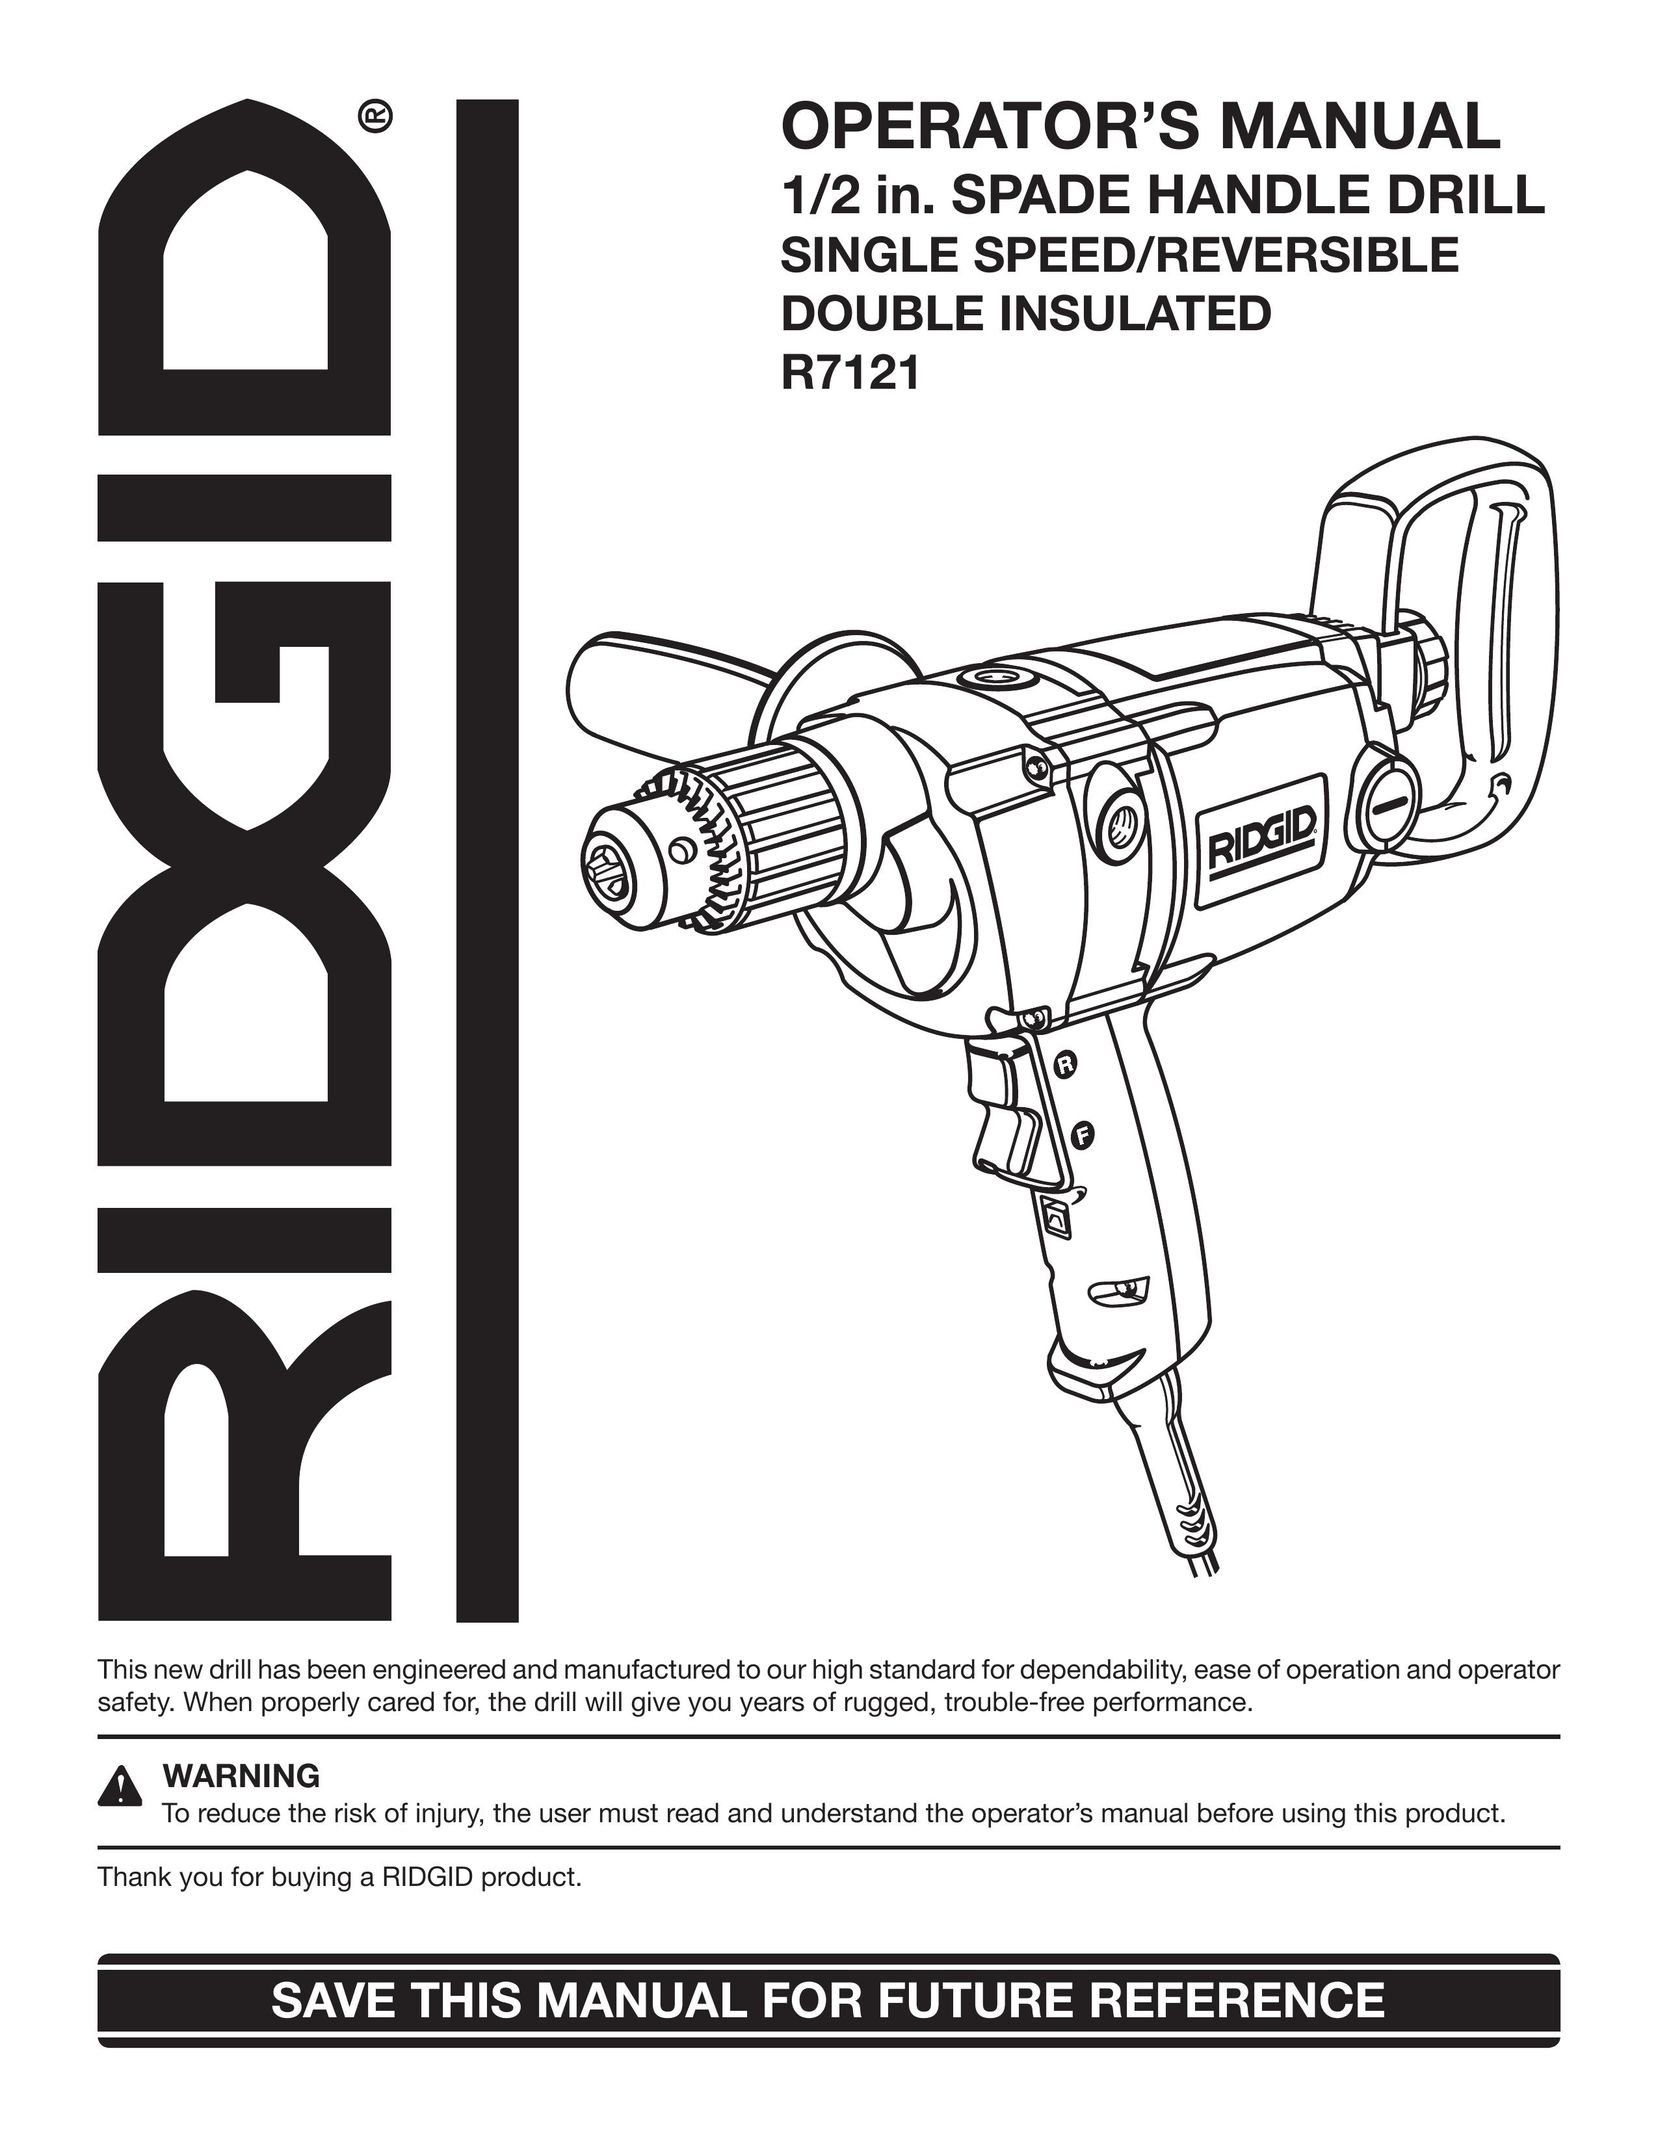 RIDGID R7121 Drill User Manual